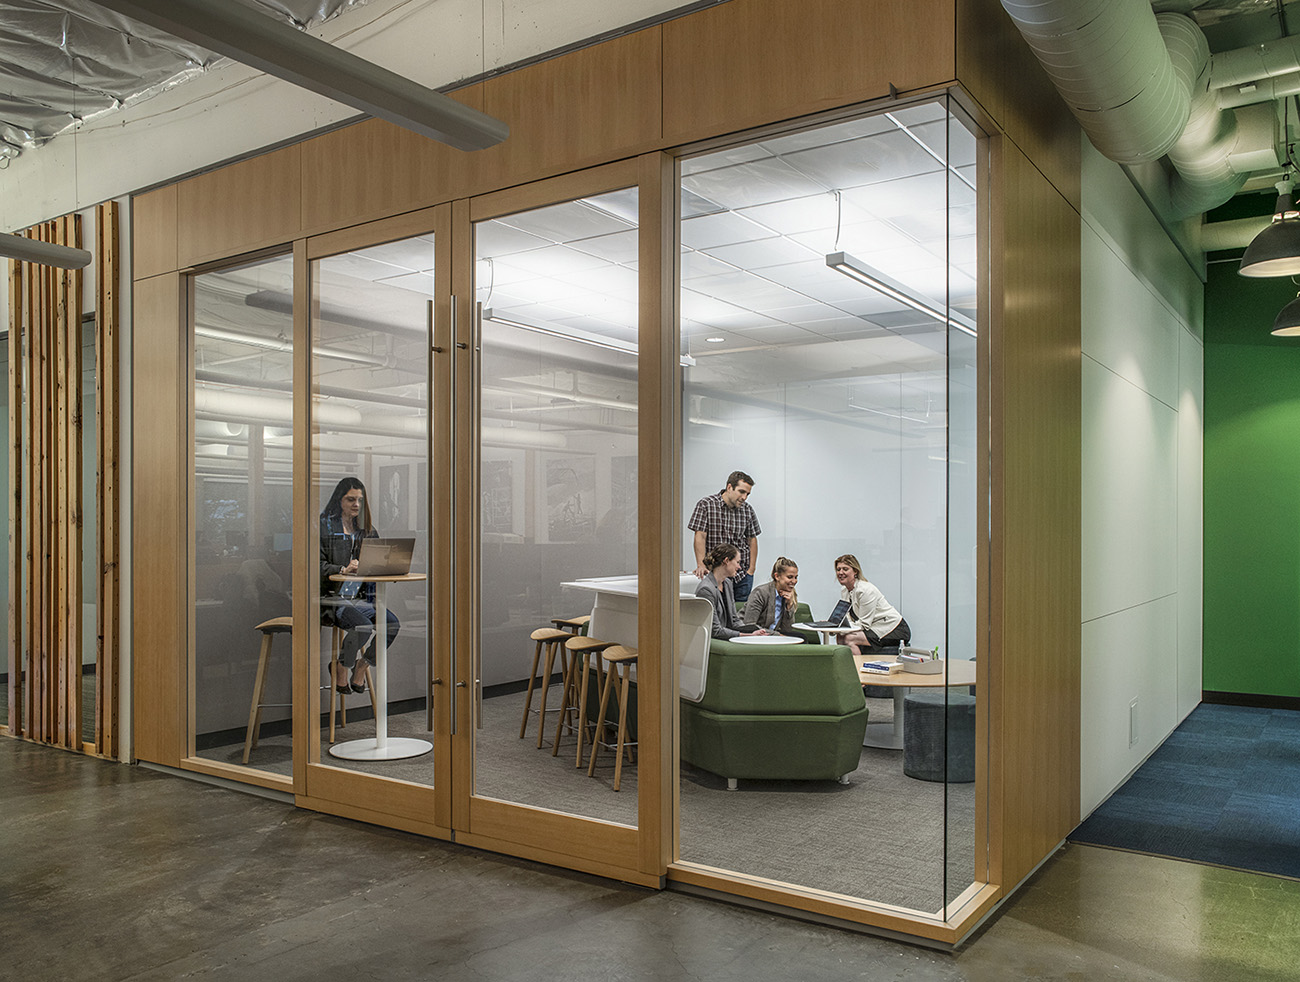 A Peek Inside Fortis Construction’s Portland Office